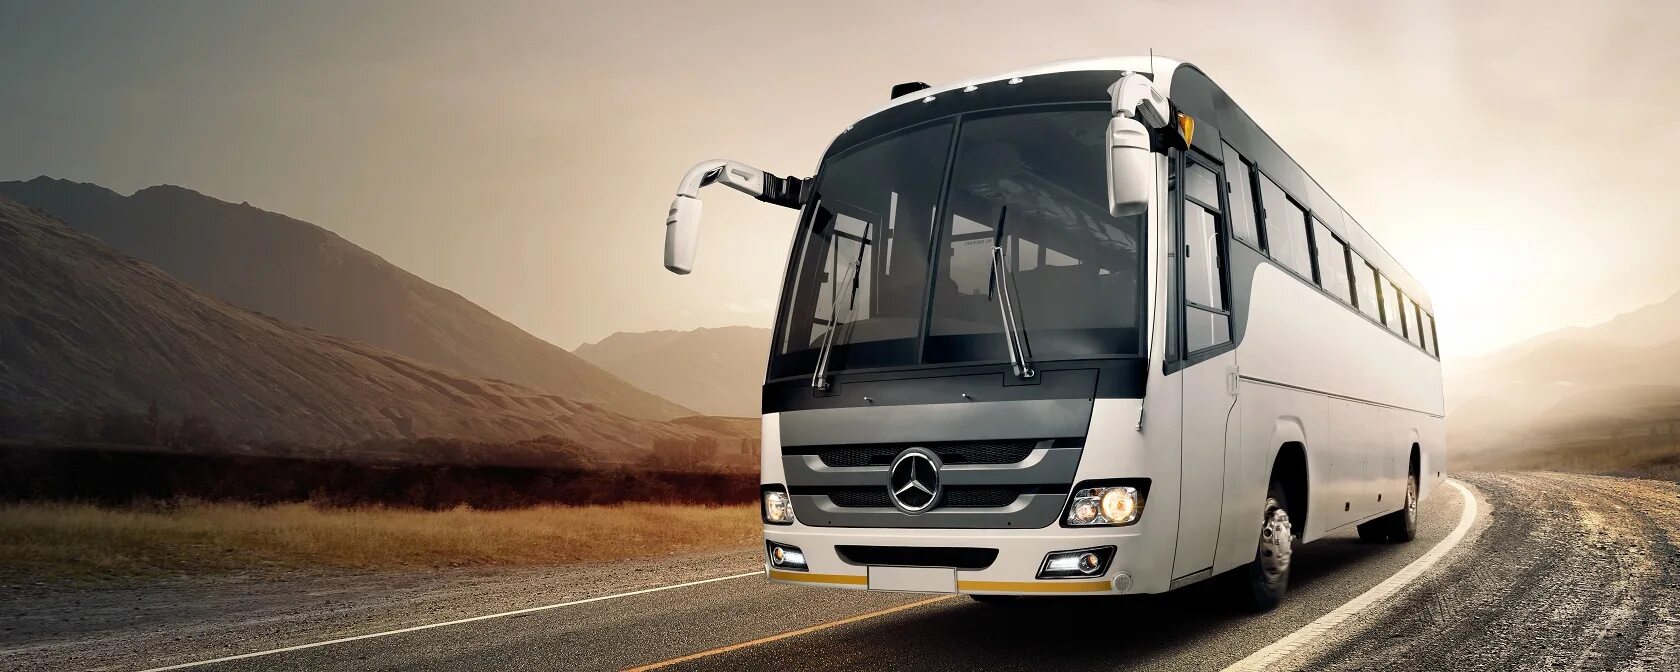 Mercedes Benz Bus. Красивый автобус. Автобусы фото красивые. Рейсовый автобус на красивом фоне.